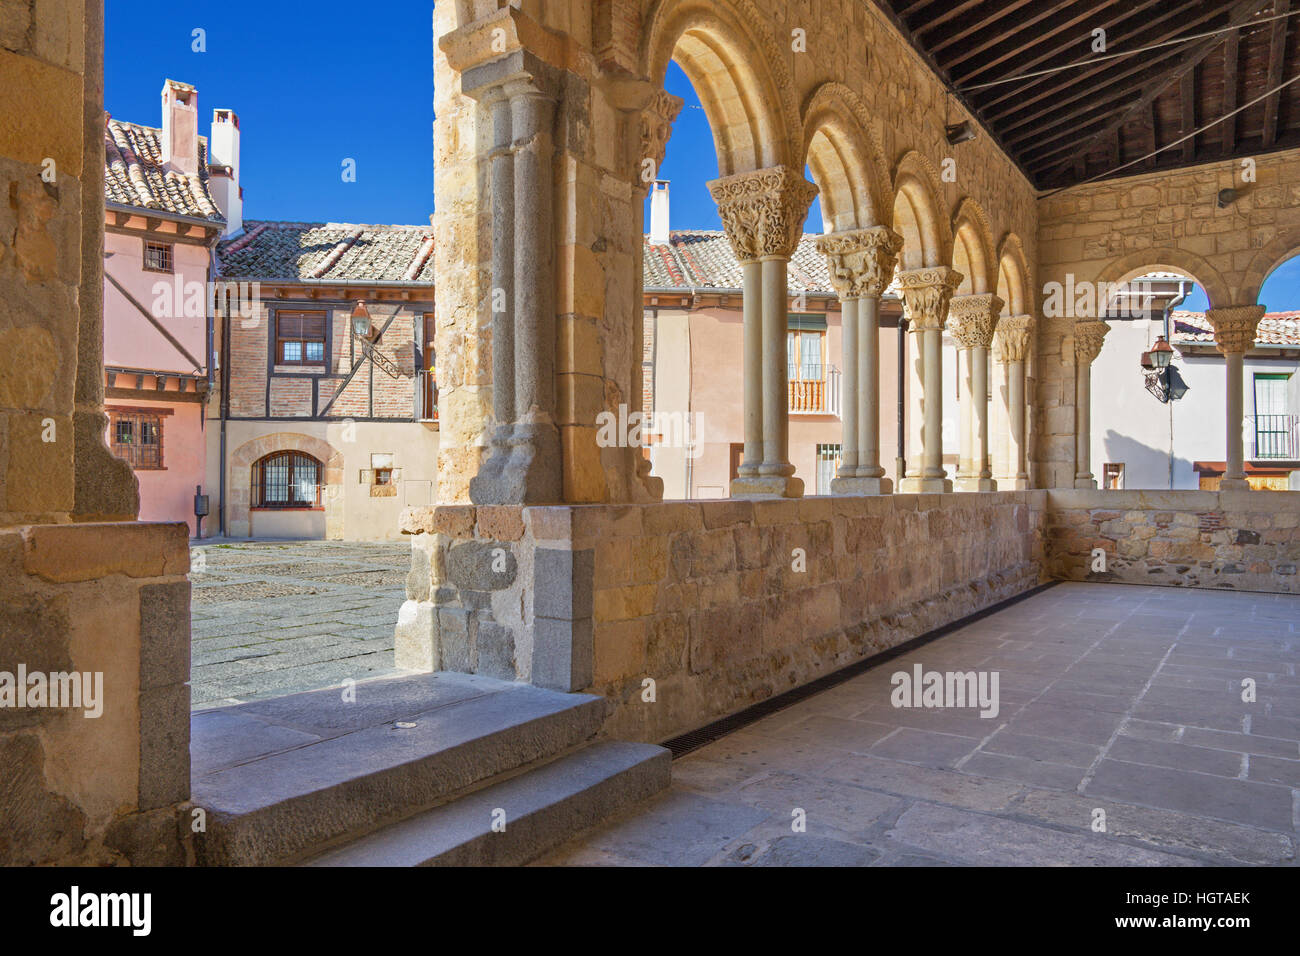 Segovia - dem Portikus des romanischen Kirche Iglesia de San Lorenzo und das Quadrat mit dem gleichen Namen. Stockfoto